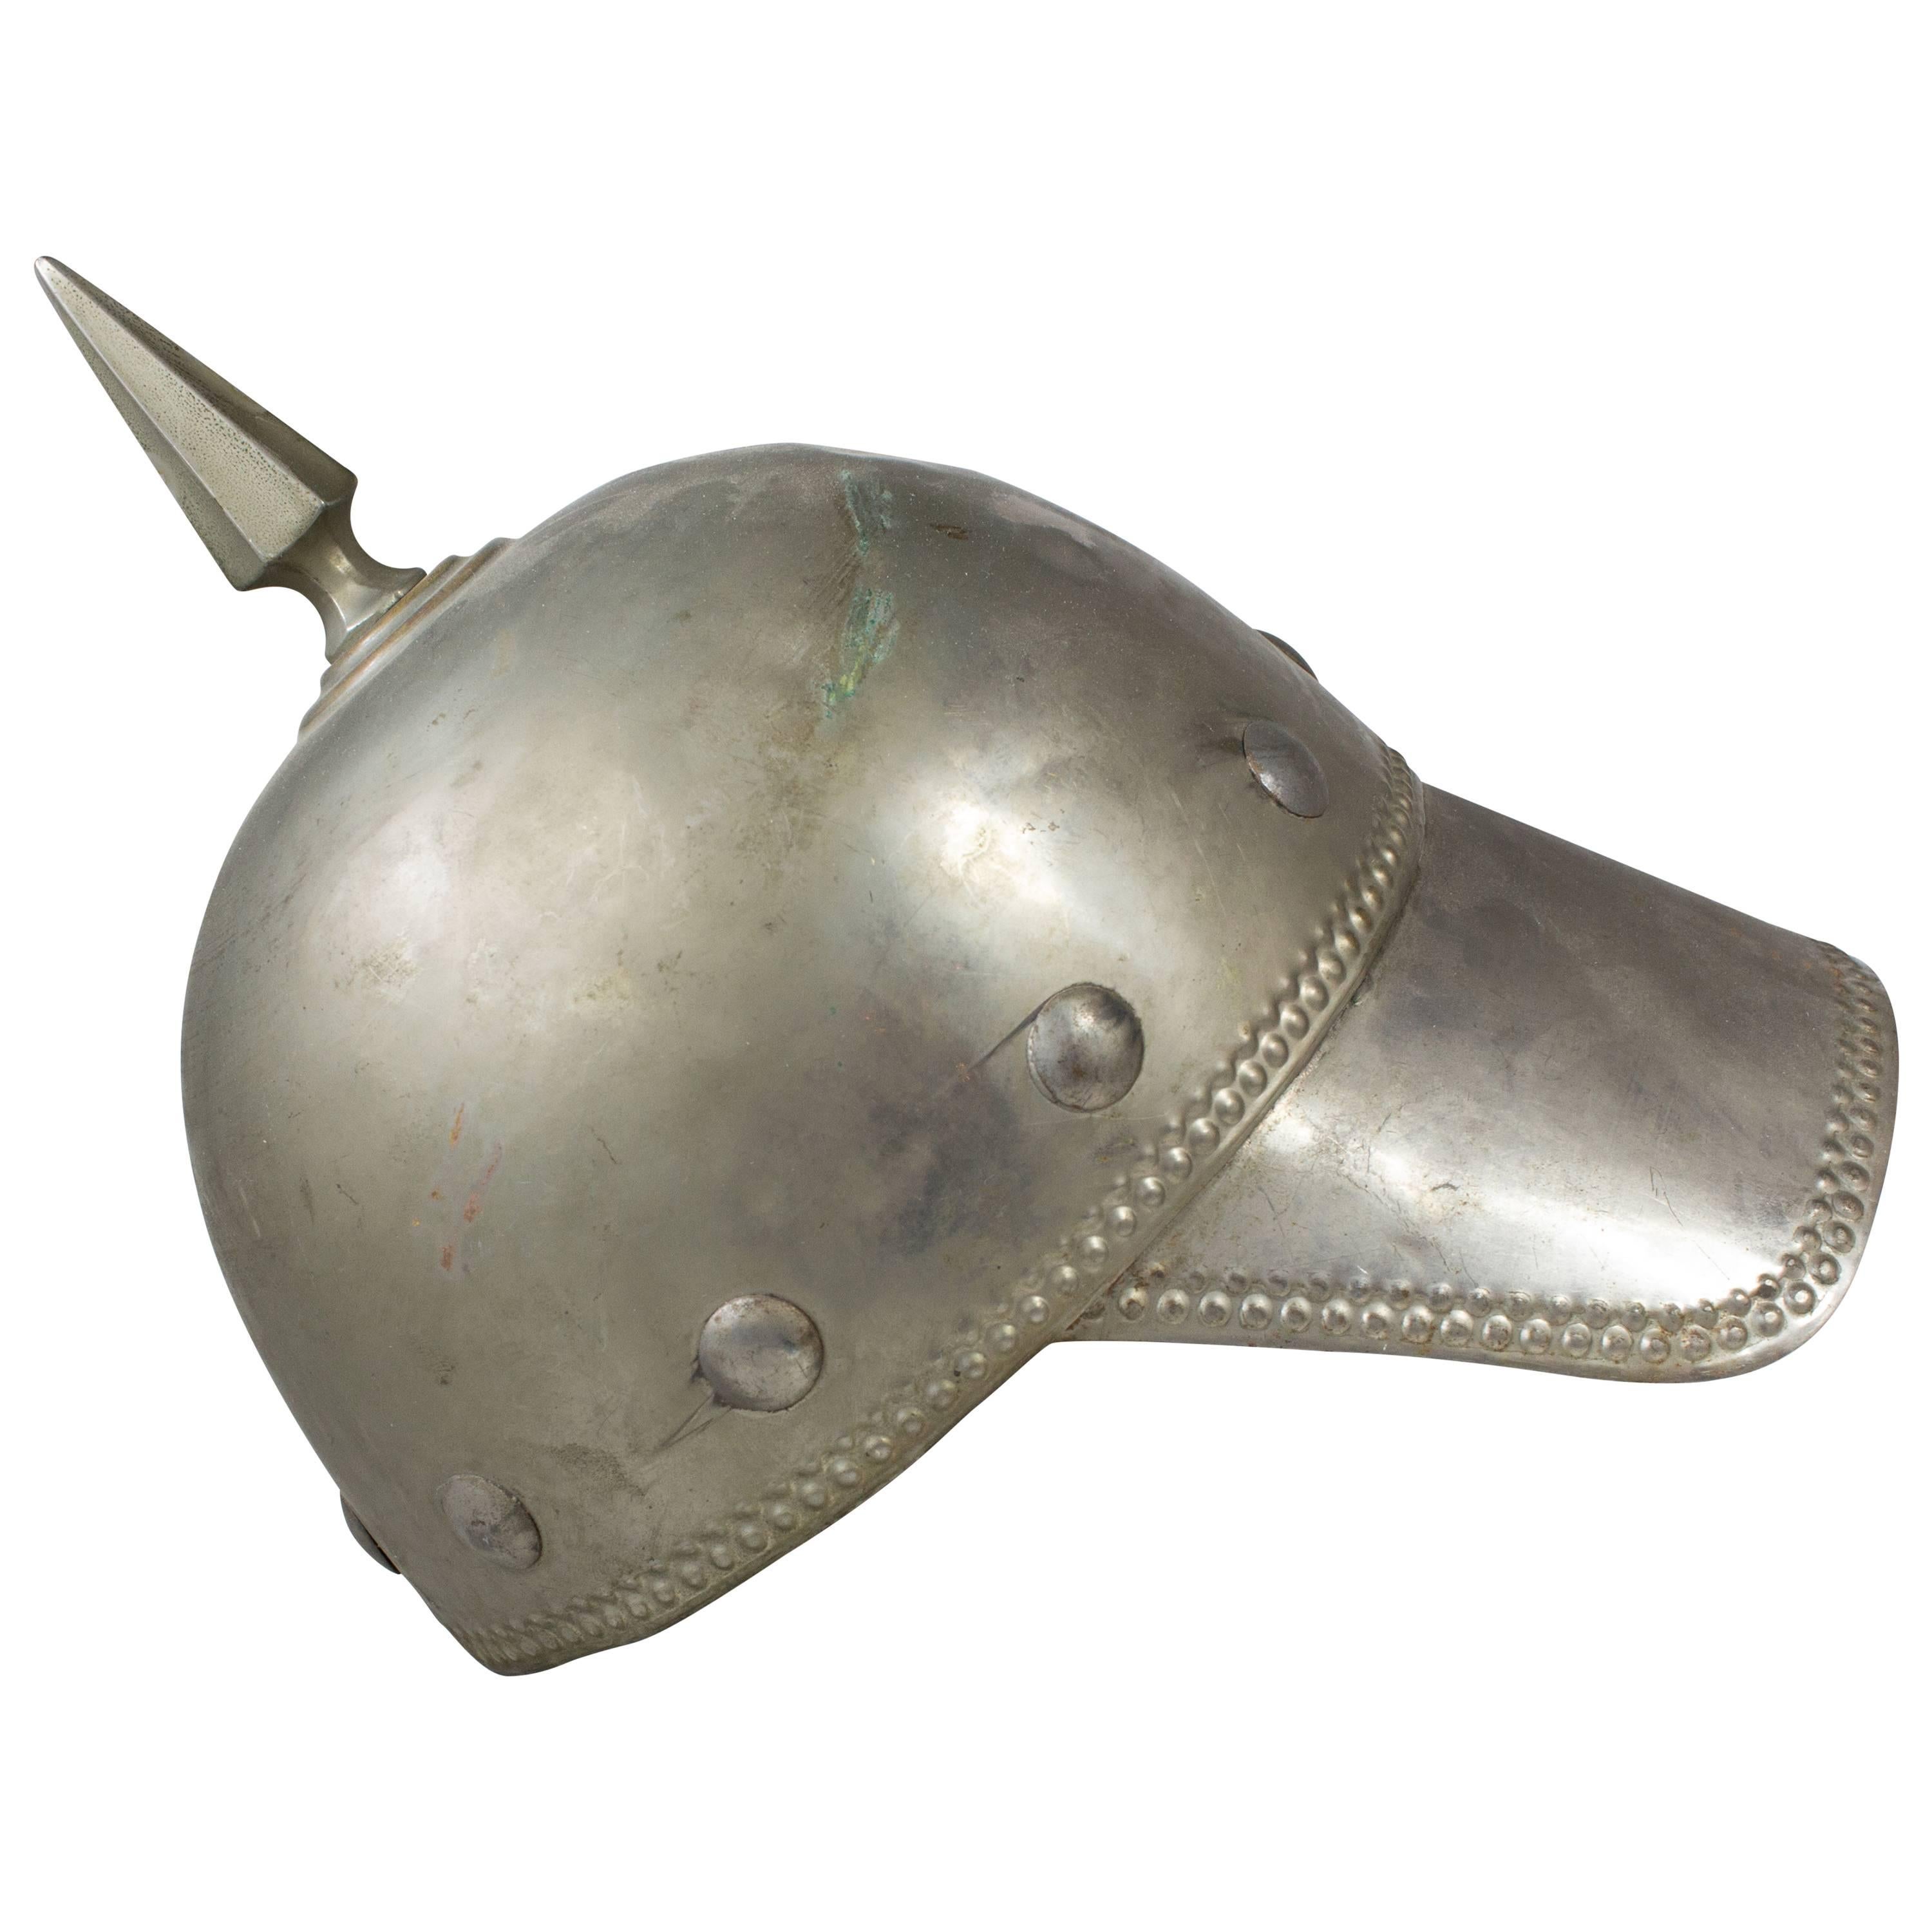 Late 19th Century Spiked Odd Fellows Helmet